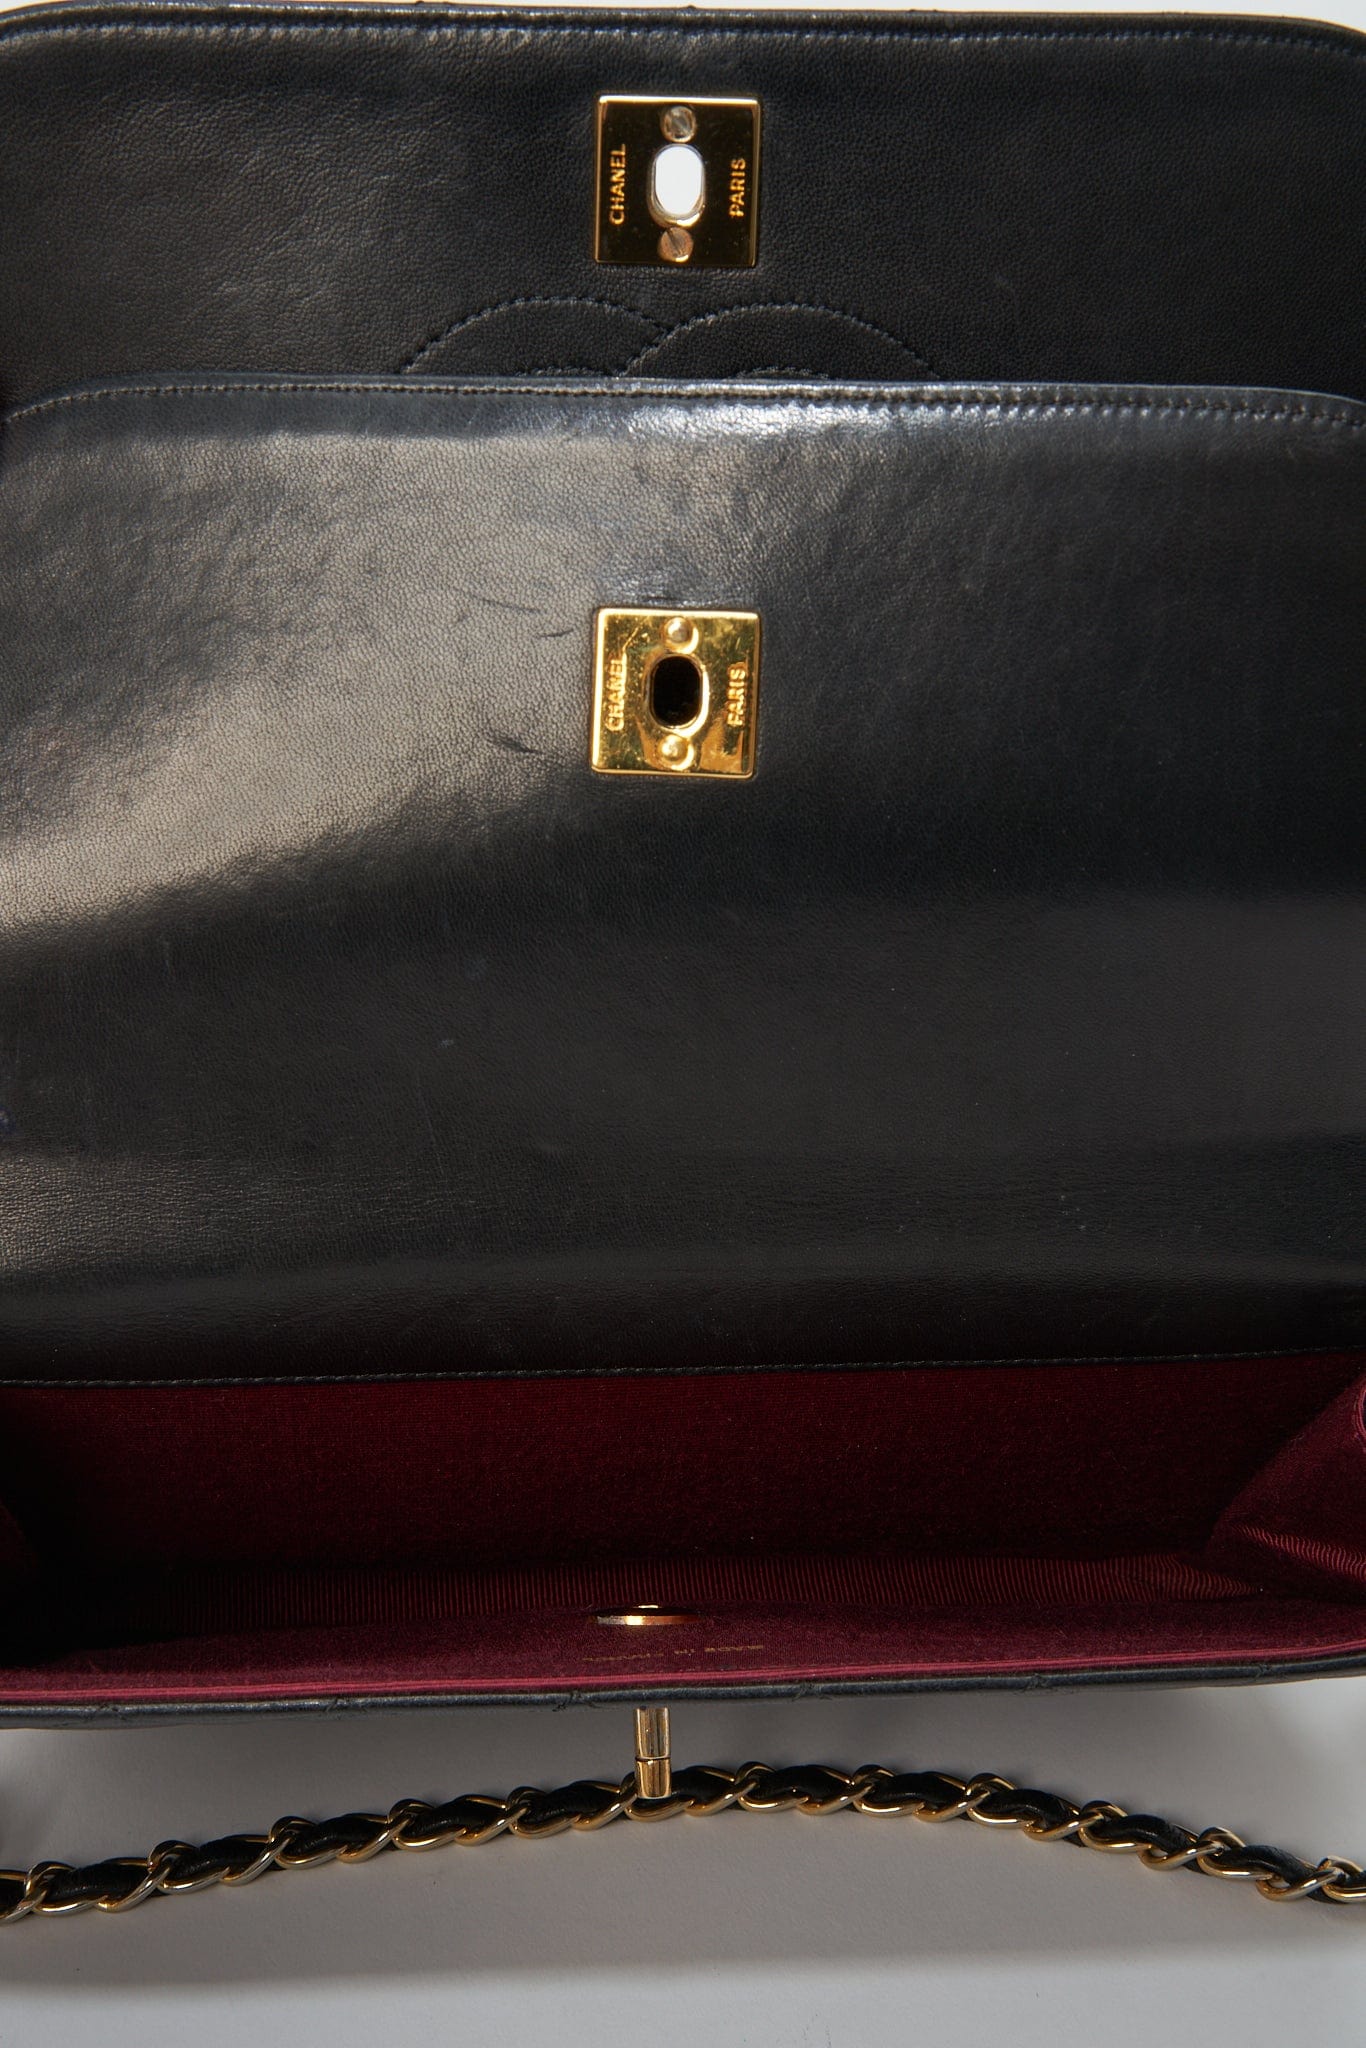 Chanel Black Quilted Lambskin Vintage Flap Bag